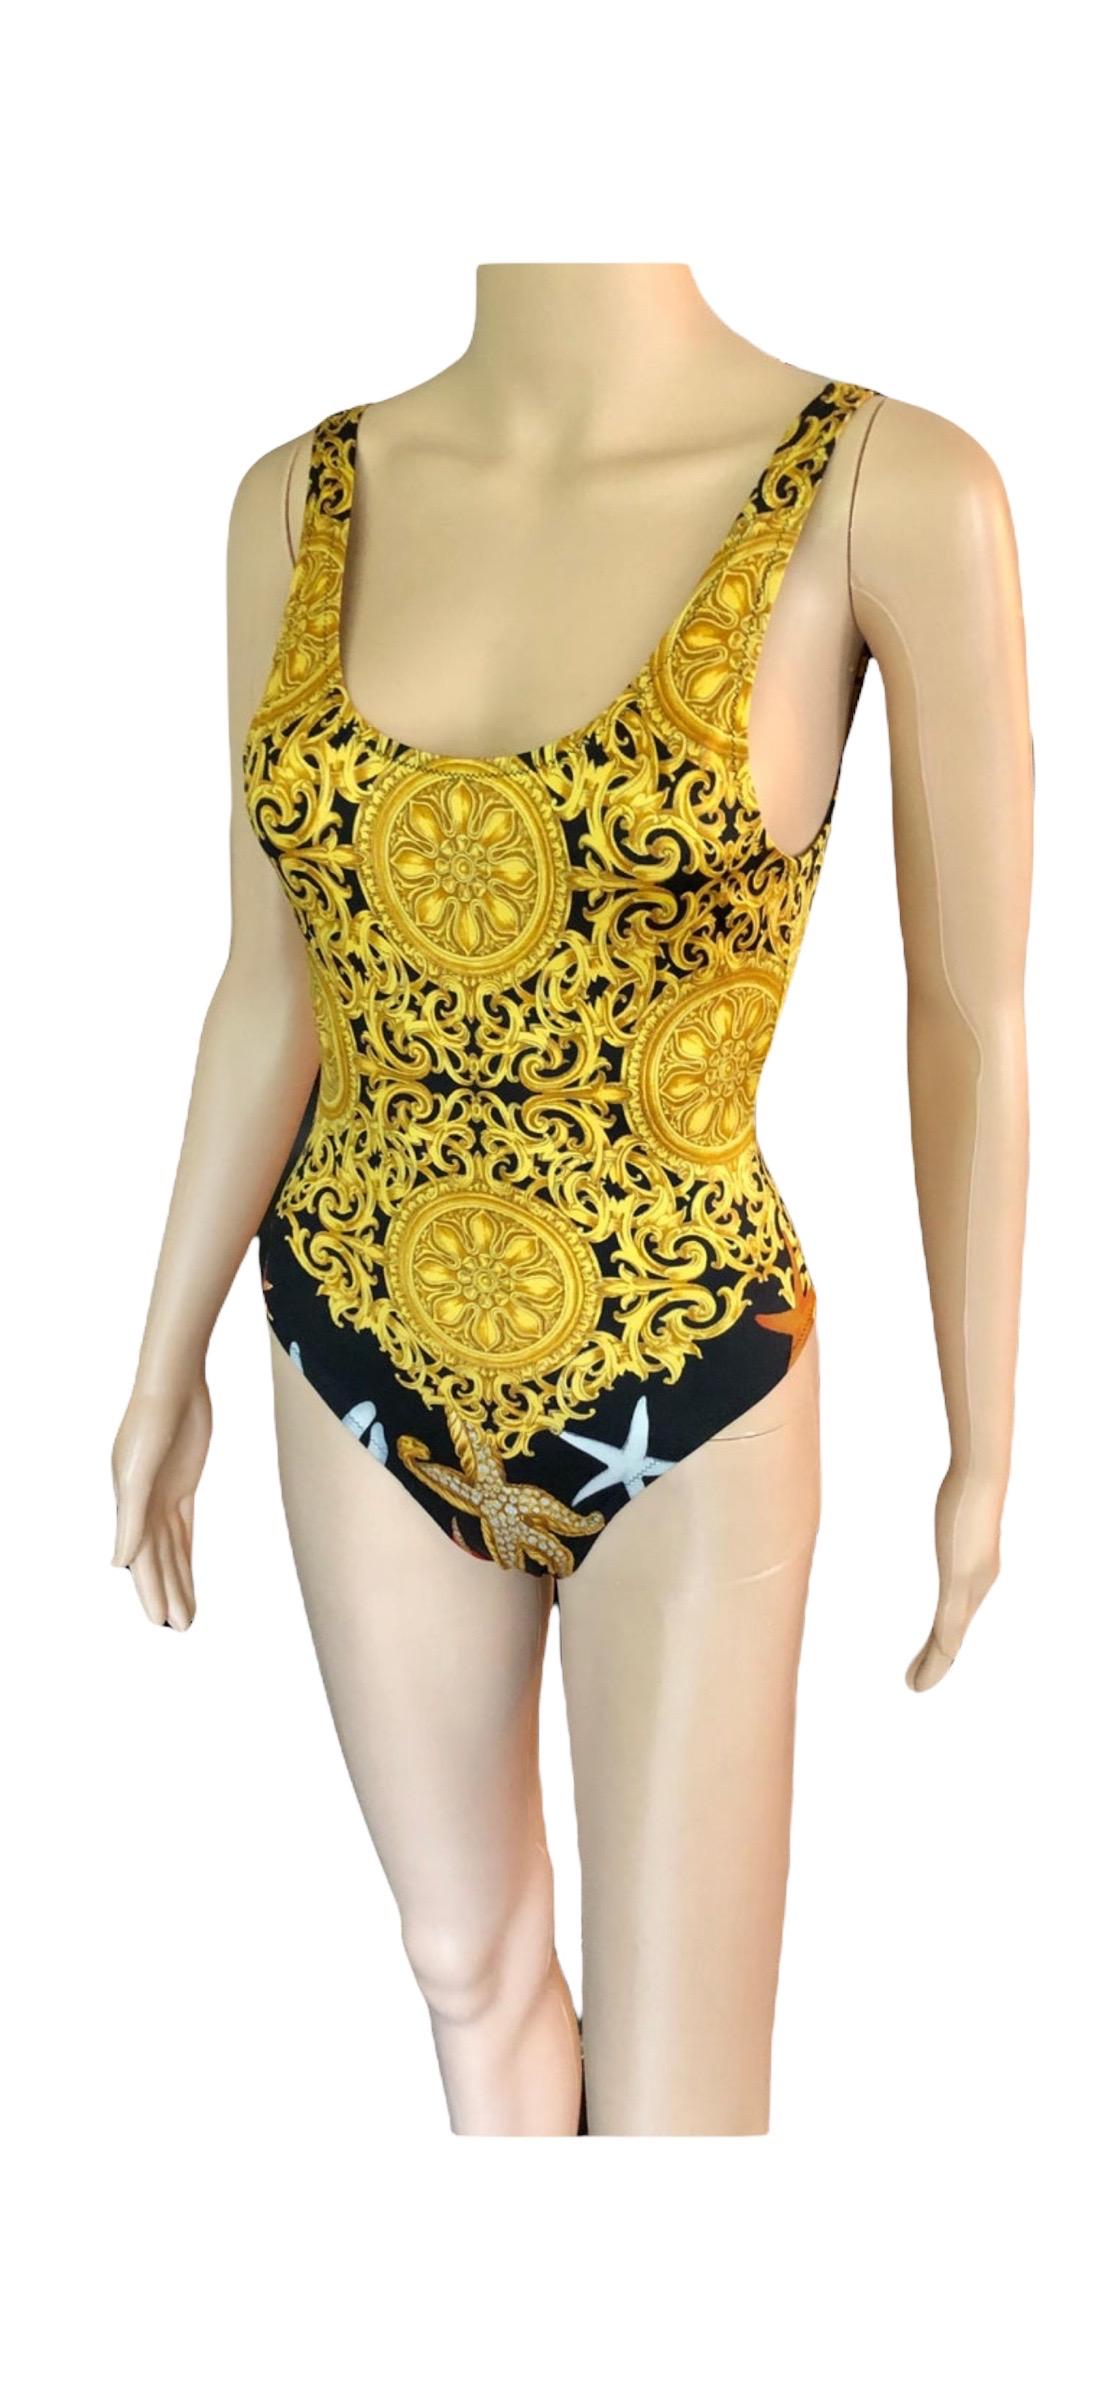 Gianni Versace S/S 1992 Baroque Seashell Backless Bodysuit Swimwear Swimsuit For Sale 7